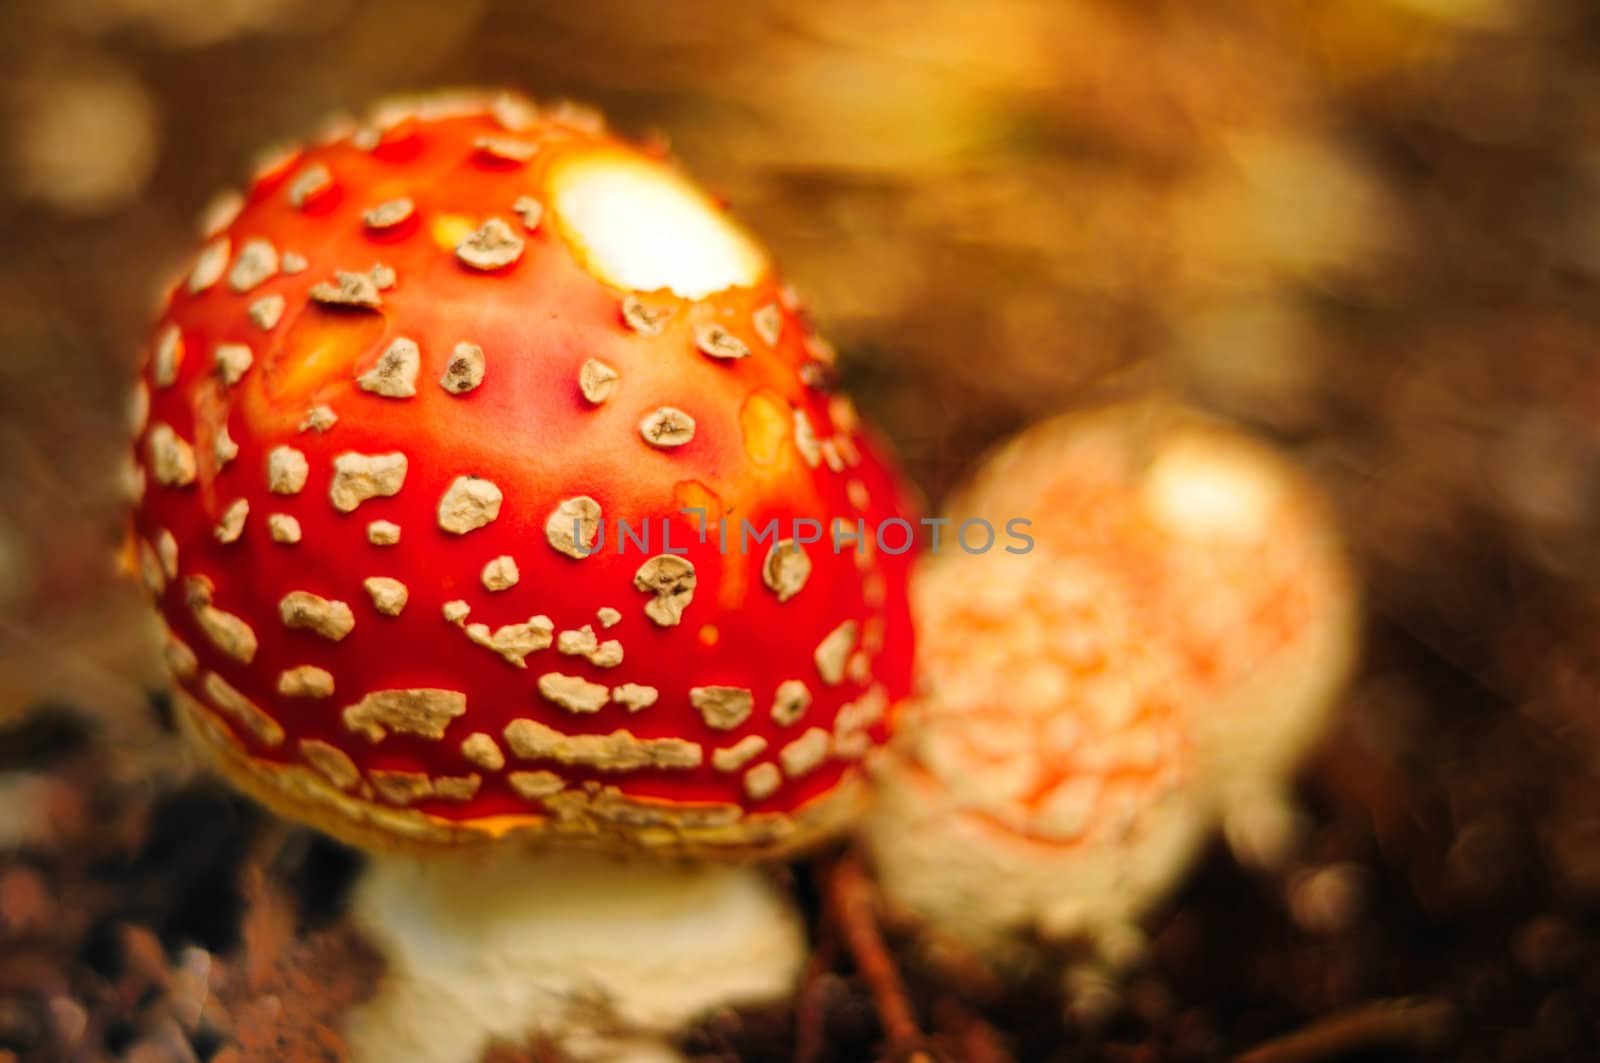 A beautiful ornamental mushroom in the wild